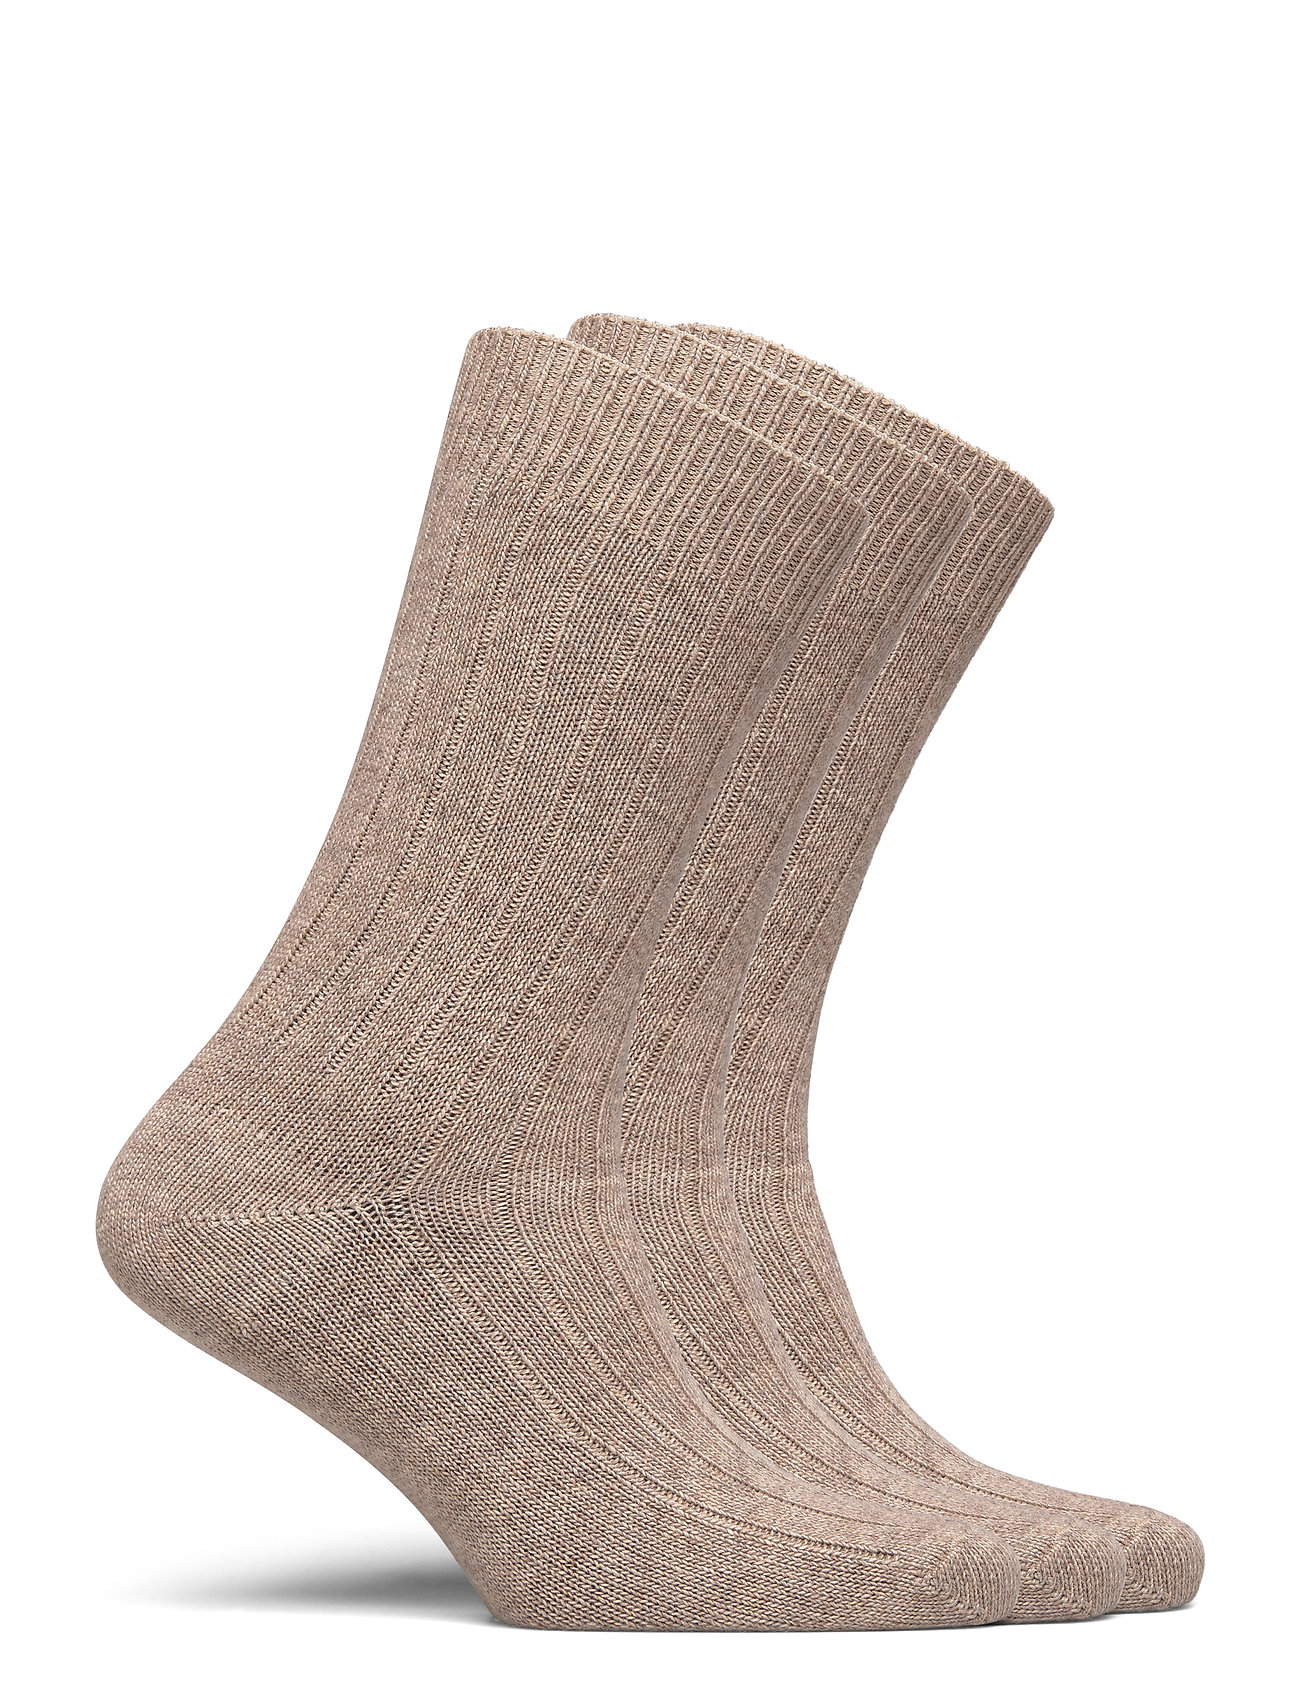 Amanda Christensen - Supreme Sock 3-pack - Įprasto ilgio kojinės - light brown melange - 1